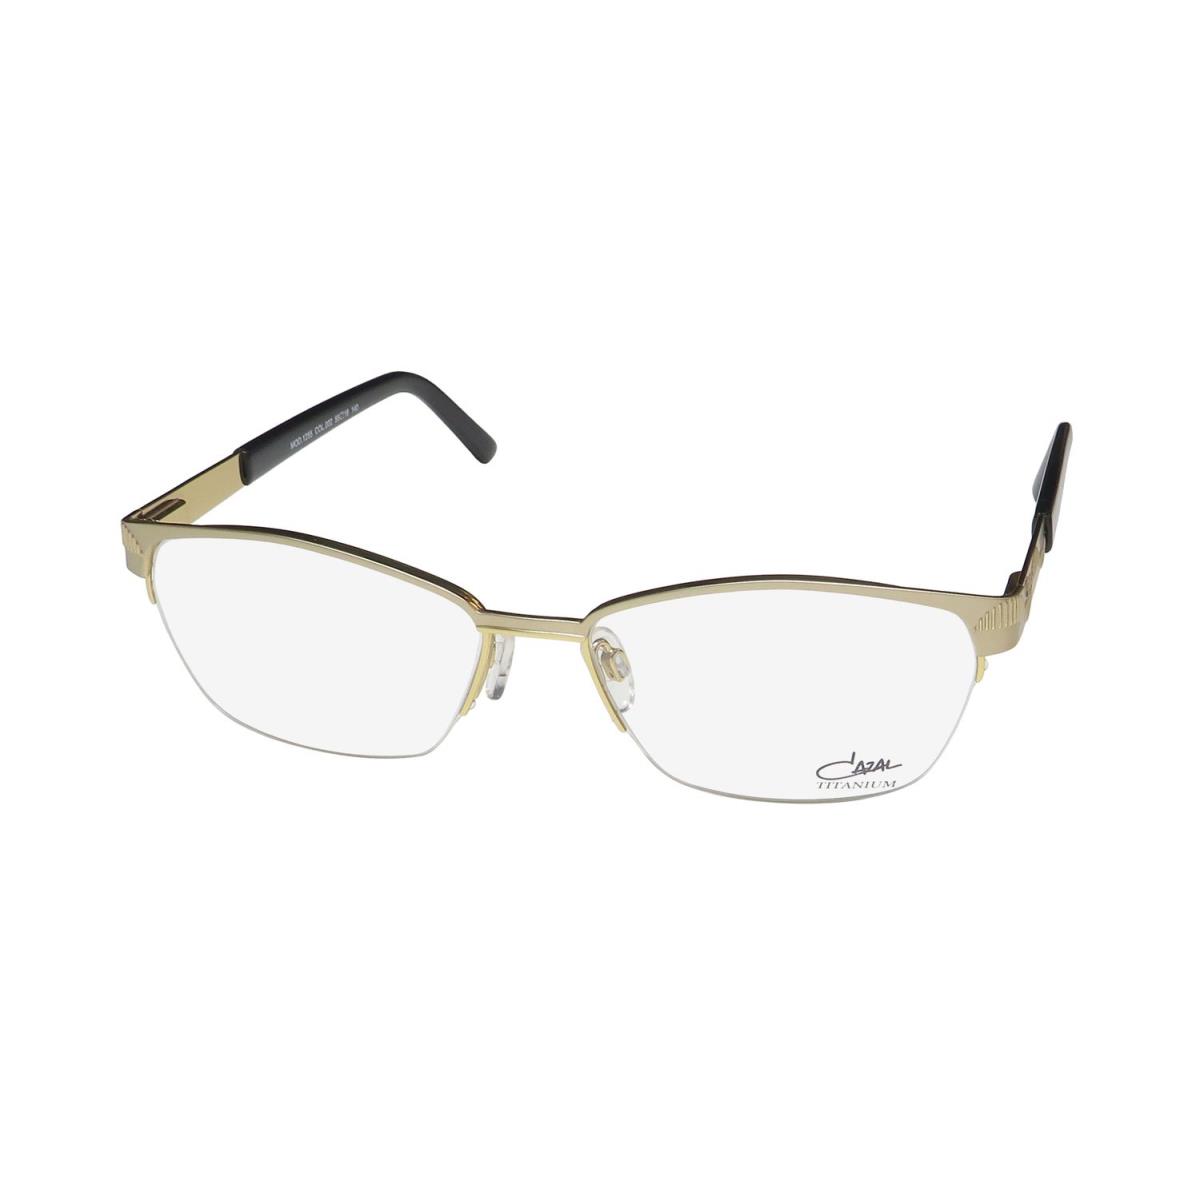 Cazal 1255 Titanium Made IN Germany NO Allergy Metal Rare Eyeglass Frame/eyewear Gold